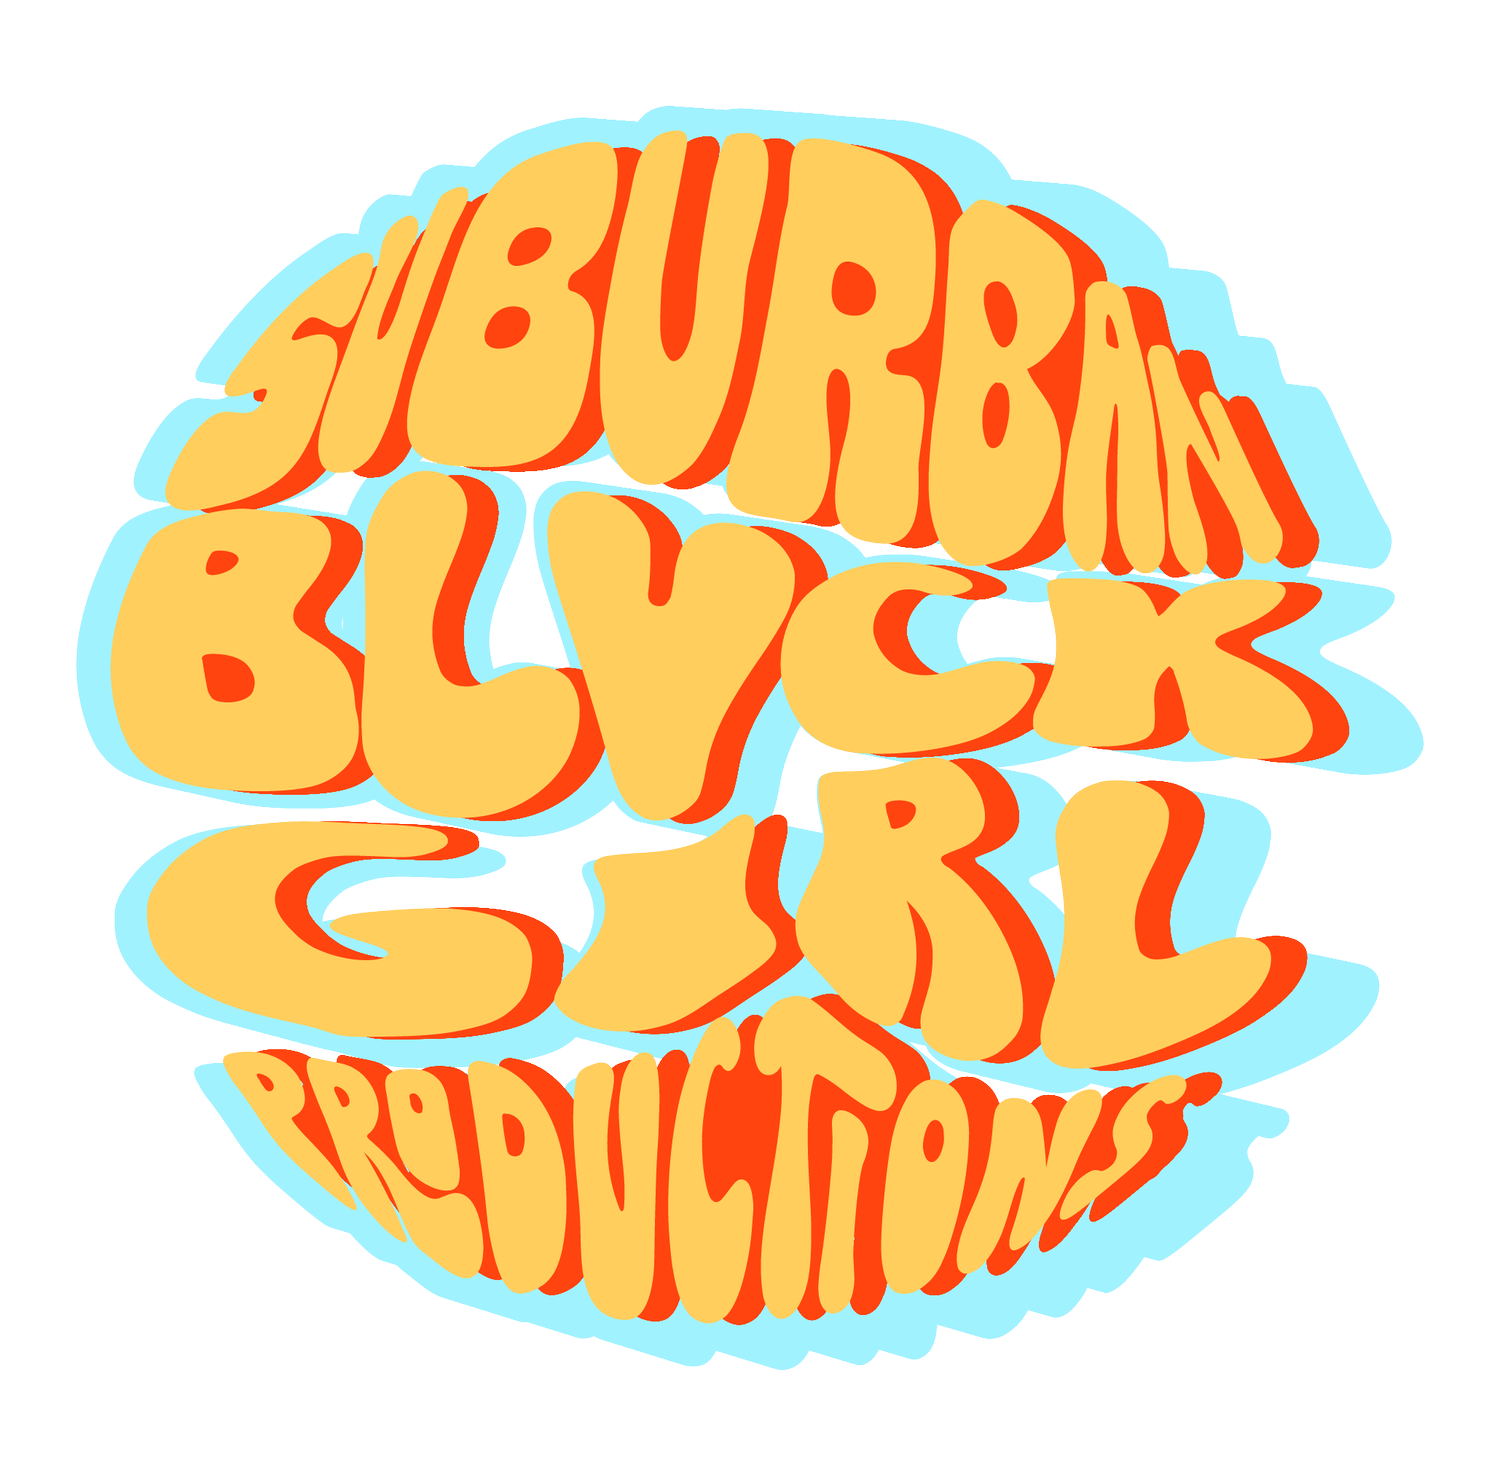 Suburban Blvck Girl Productions, LLC